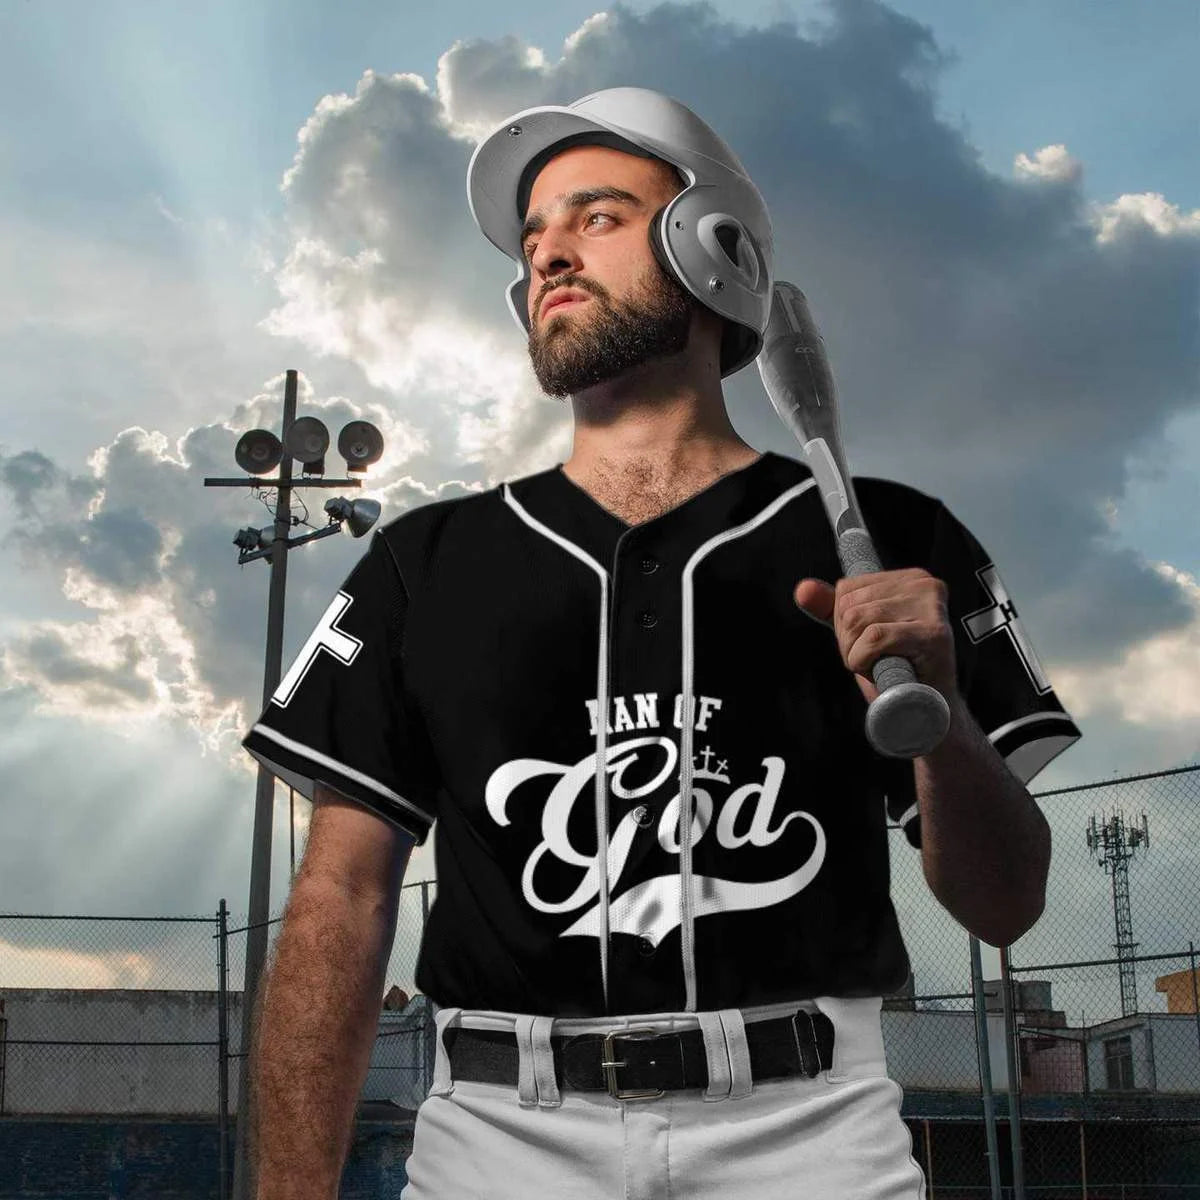 Cross Baseball Jersey - Man Of God Custom Printed 3D Baseball Jersey Shirt For Men Women